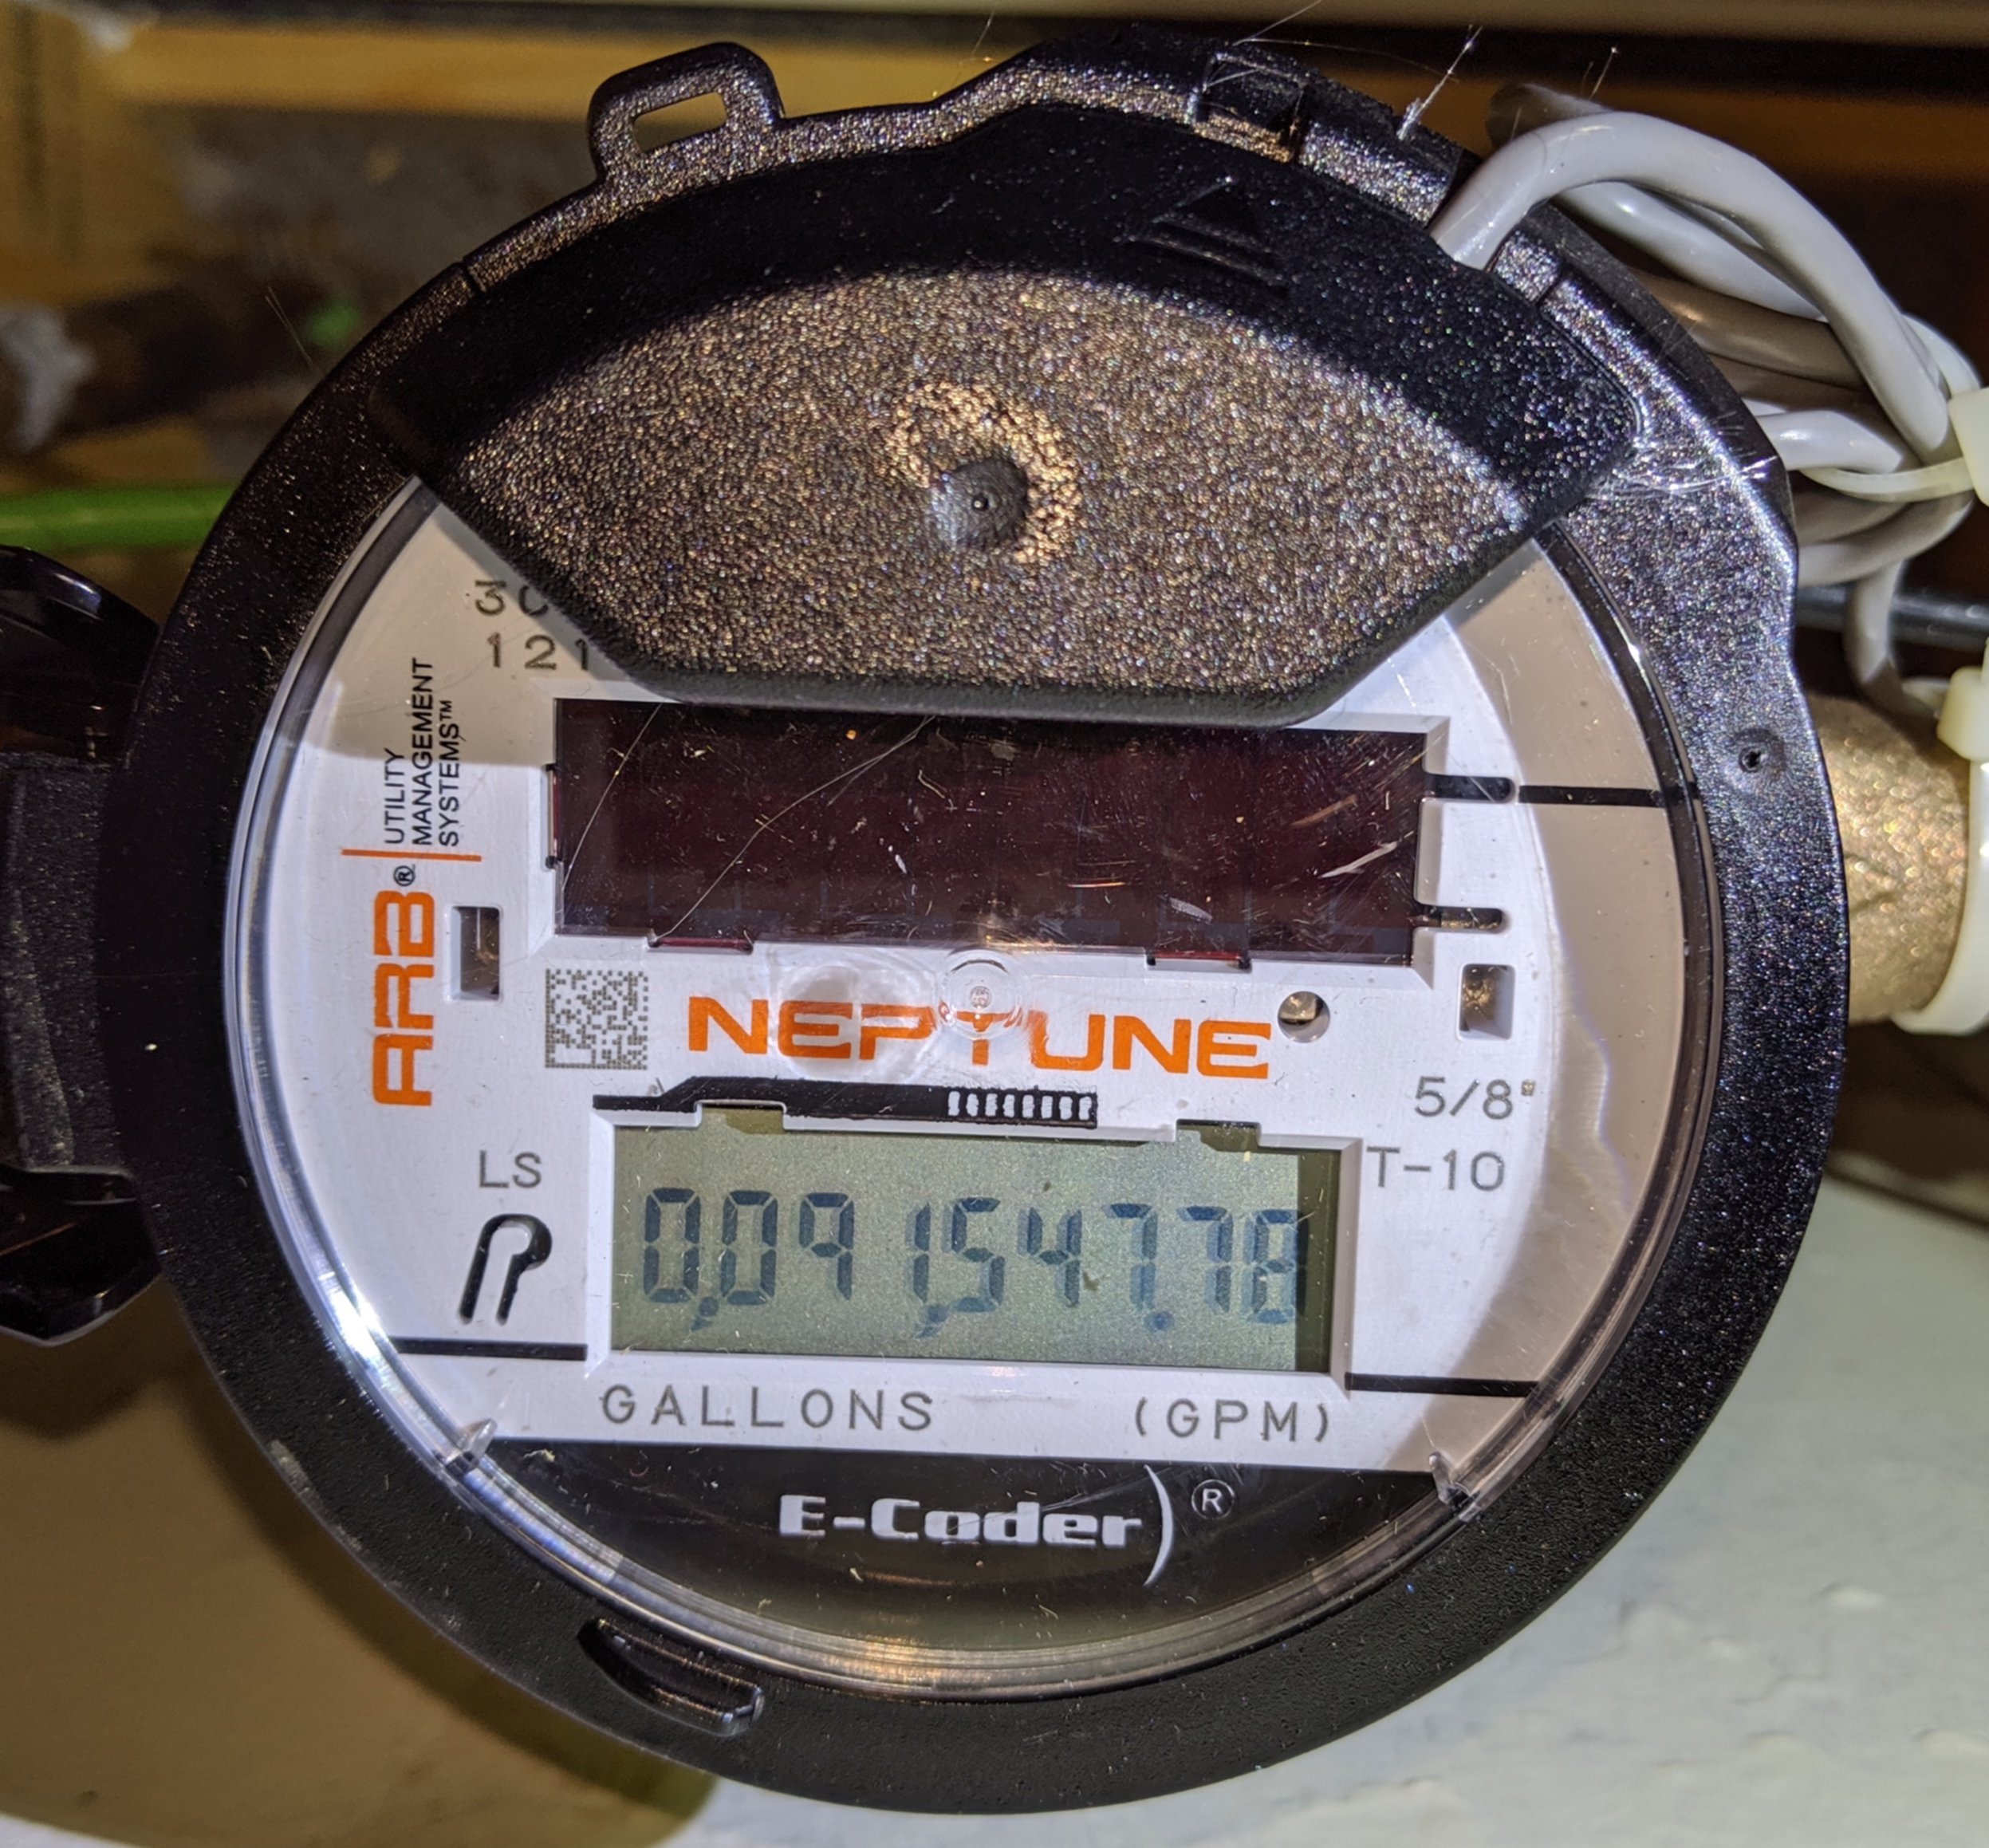 neptune e-coder water meter